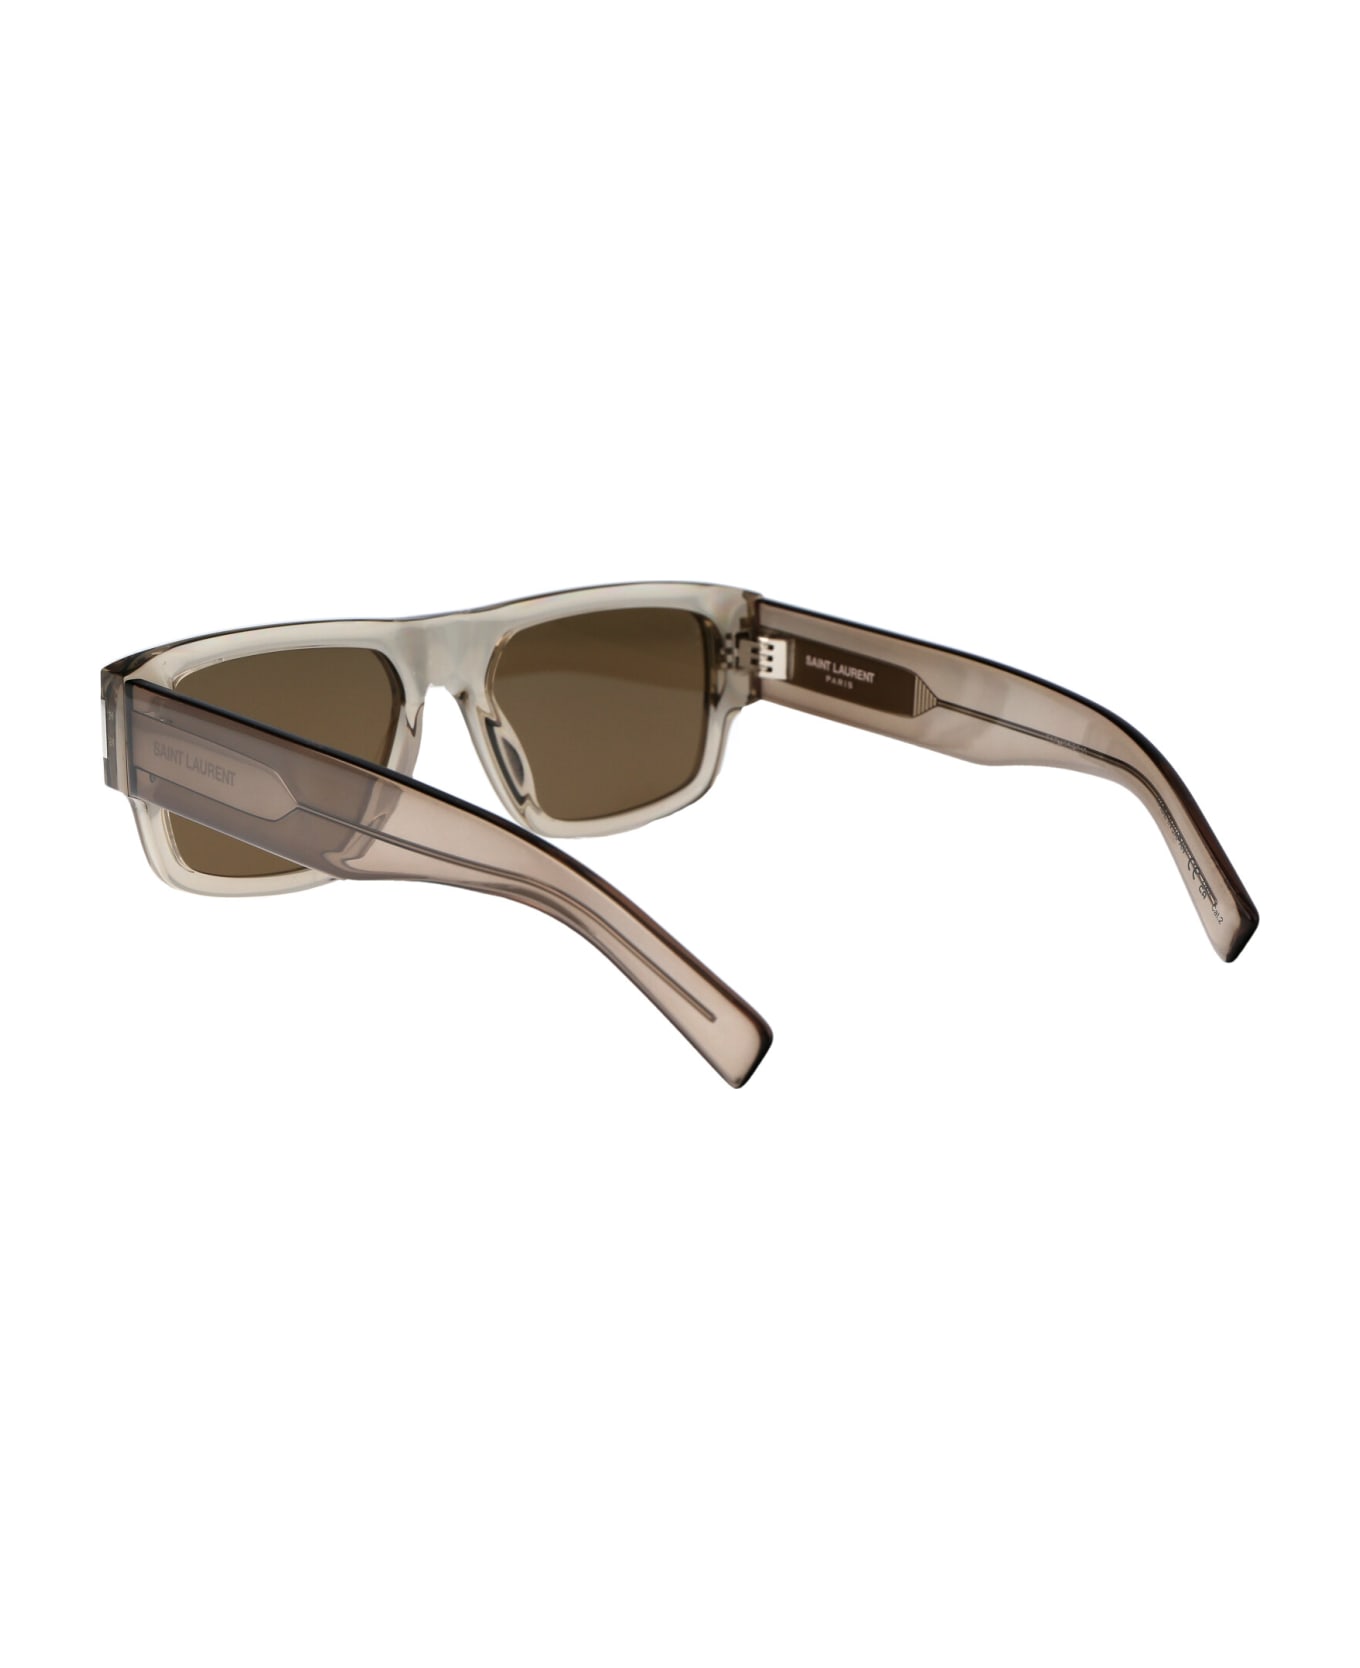 Saint Laurent Eyewear Sl 659 Sunglasses - 004 BEIGE BEIGE BROWN